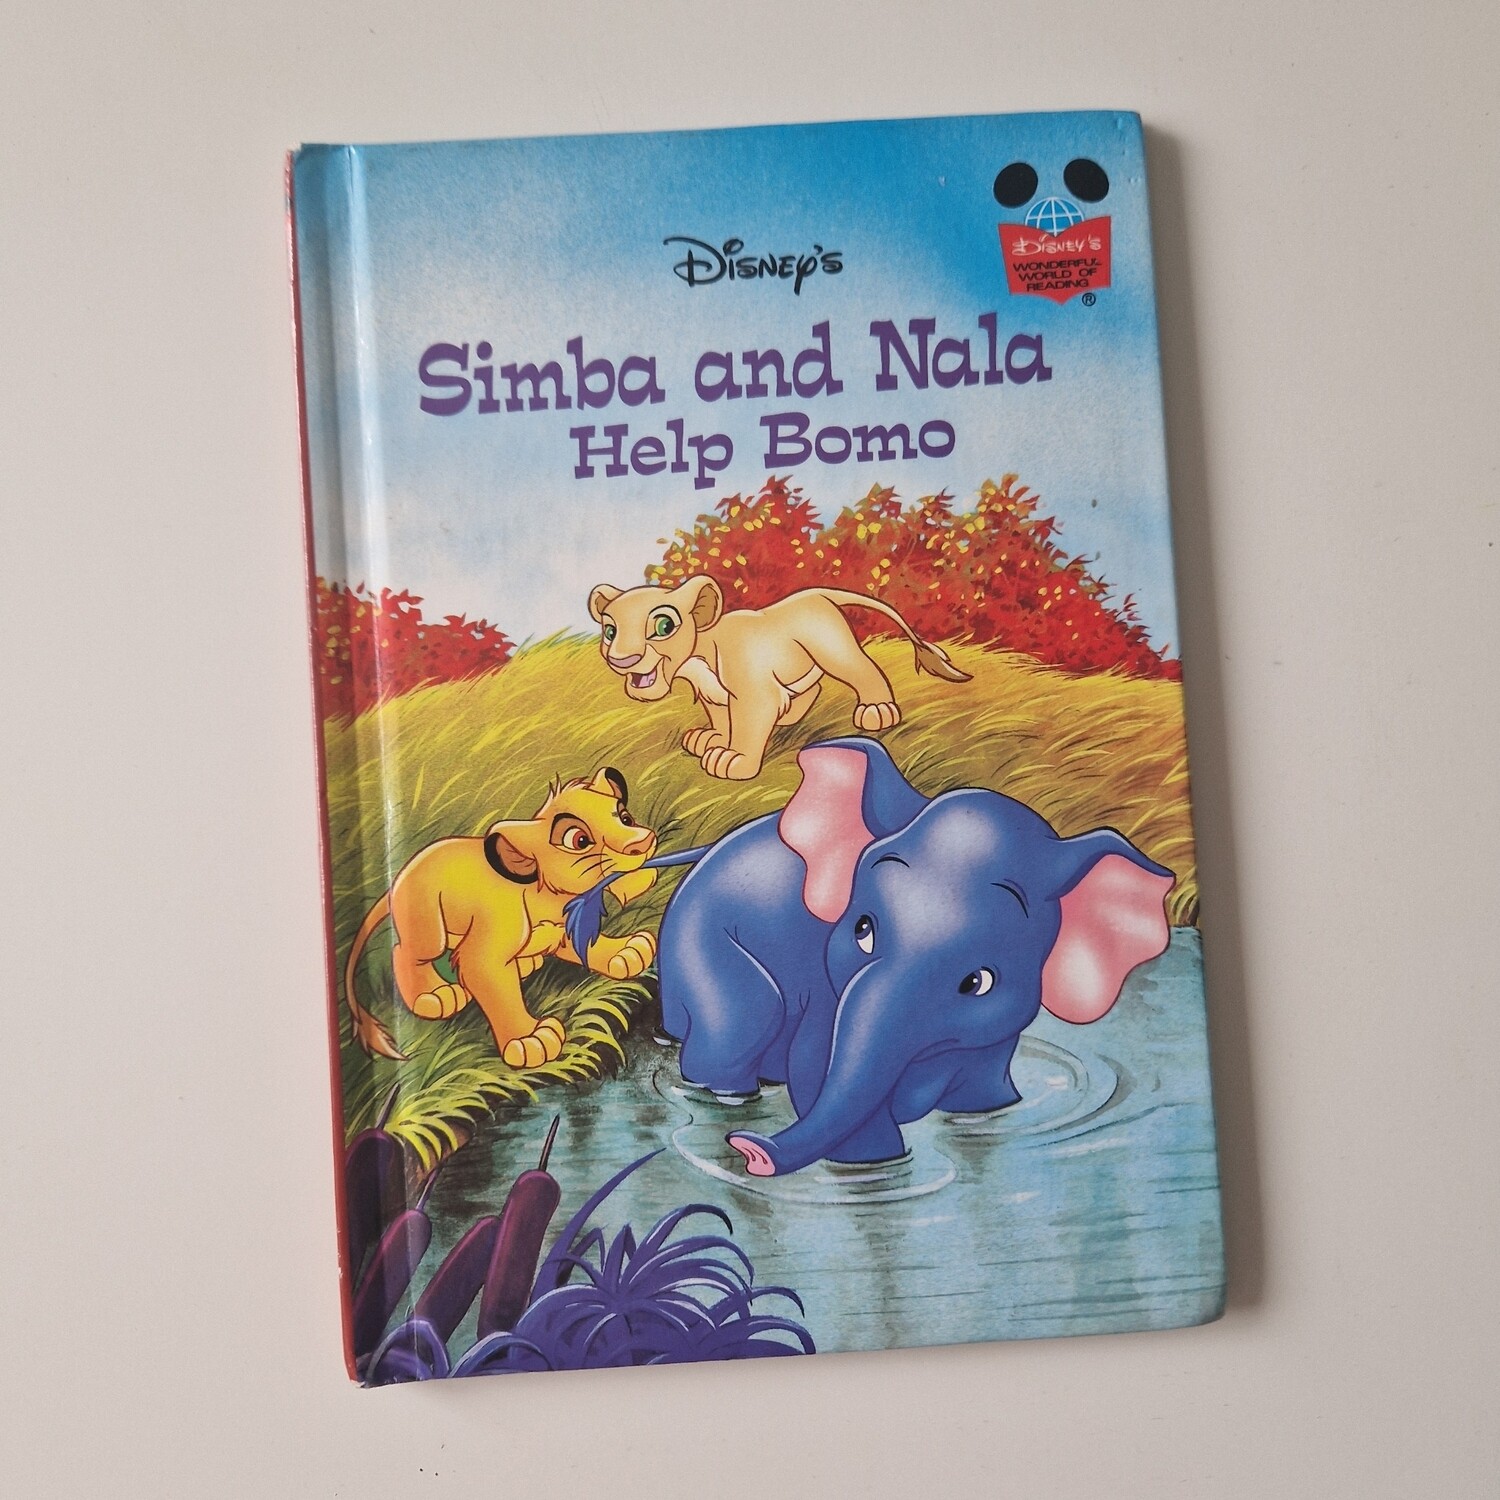 Lion King Notebook - Simba and Nala